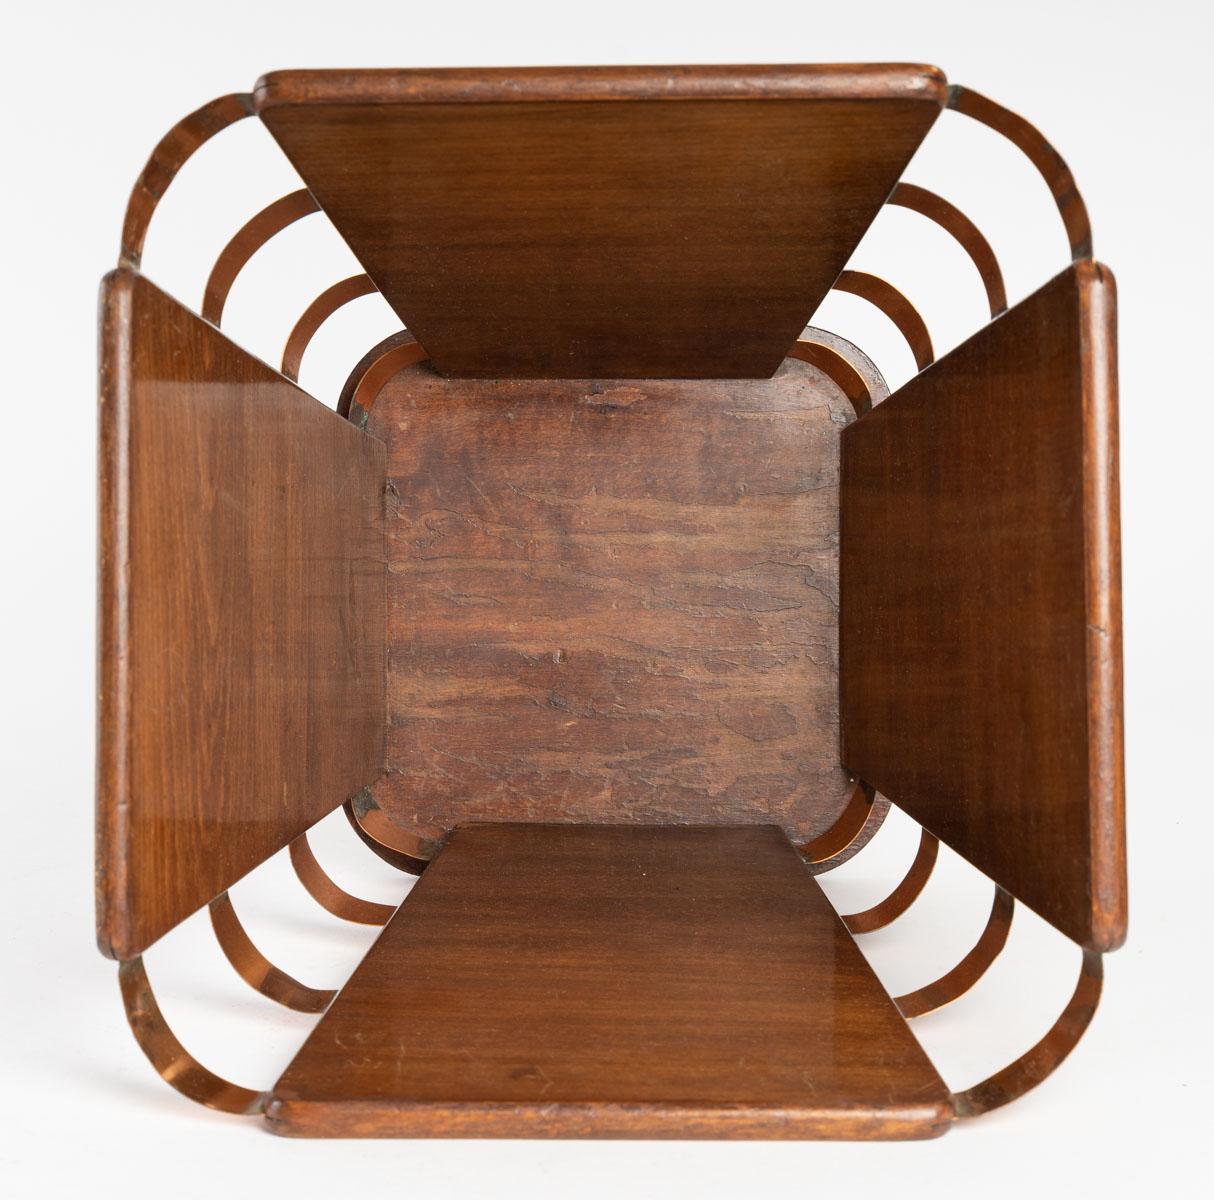 Ruhlmann's office wastepaper basket, 1930-1940, copper strips and oak veneer.
H: 30 cm, W: 31 cm, D: 30 cm